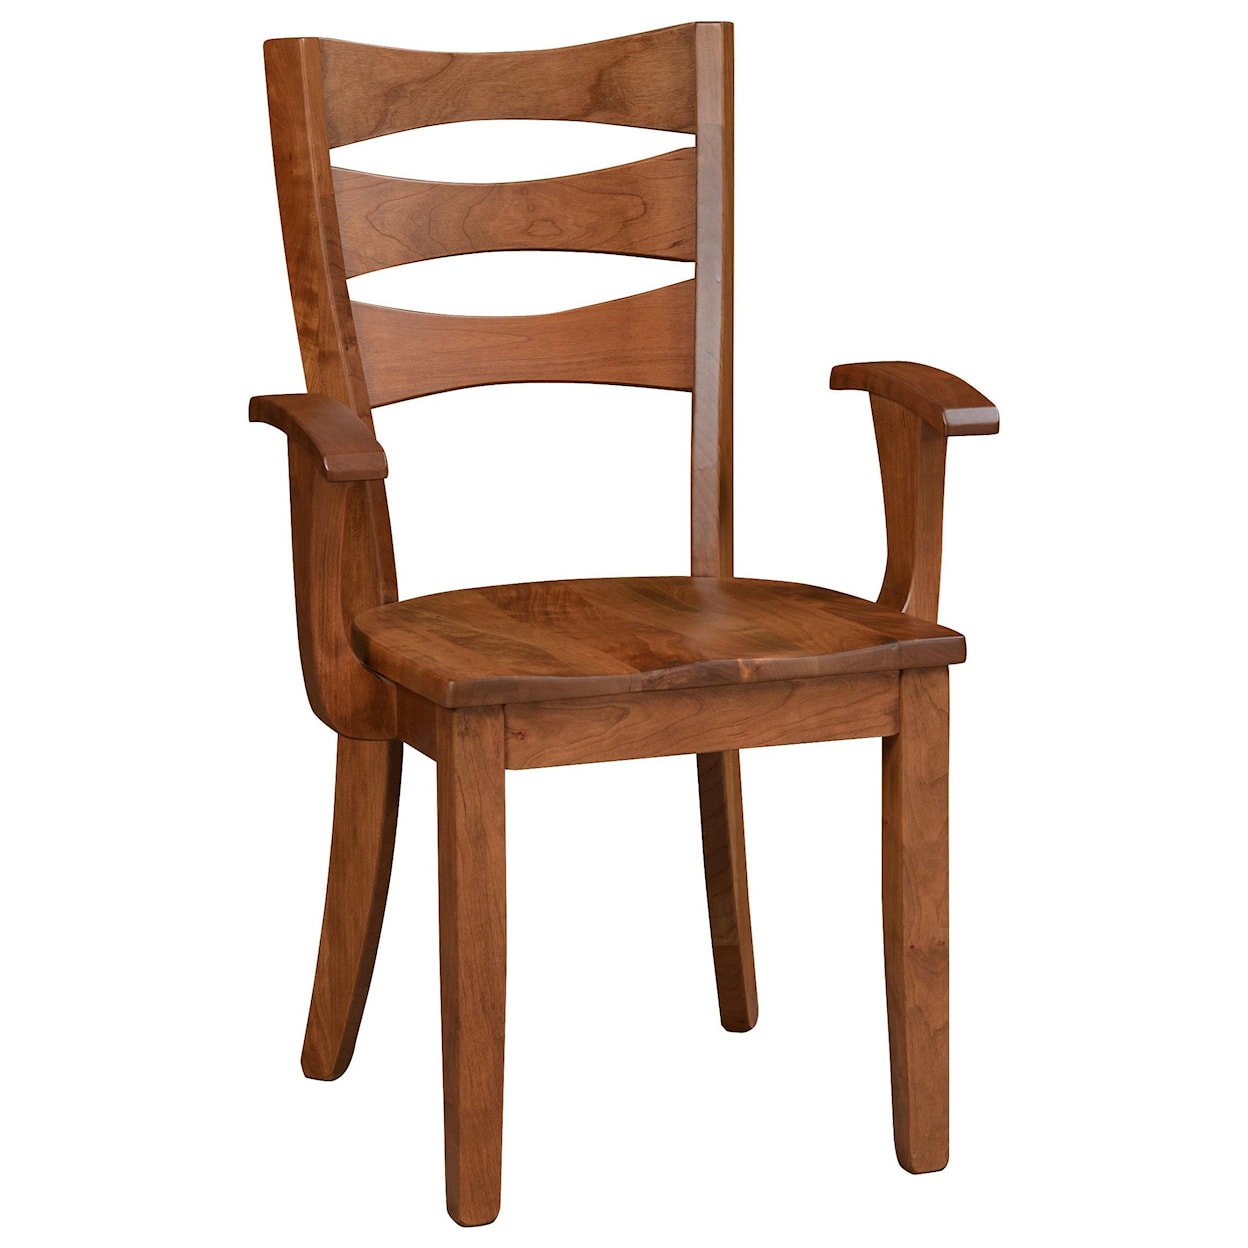 Wengerd Wood Products Sierra Arm Chair